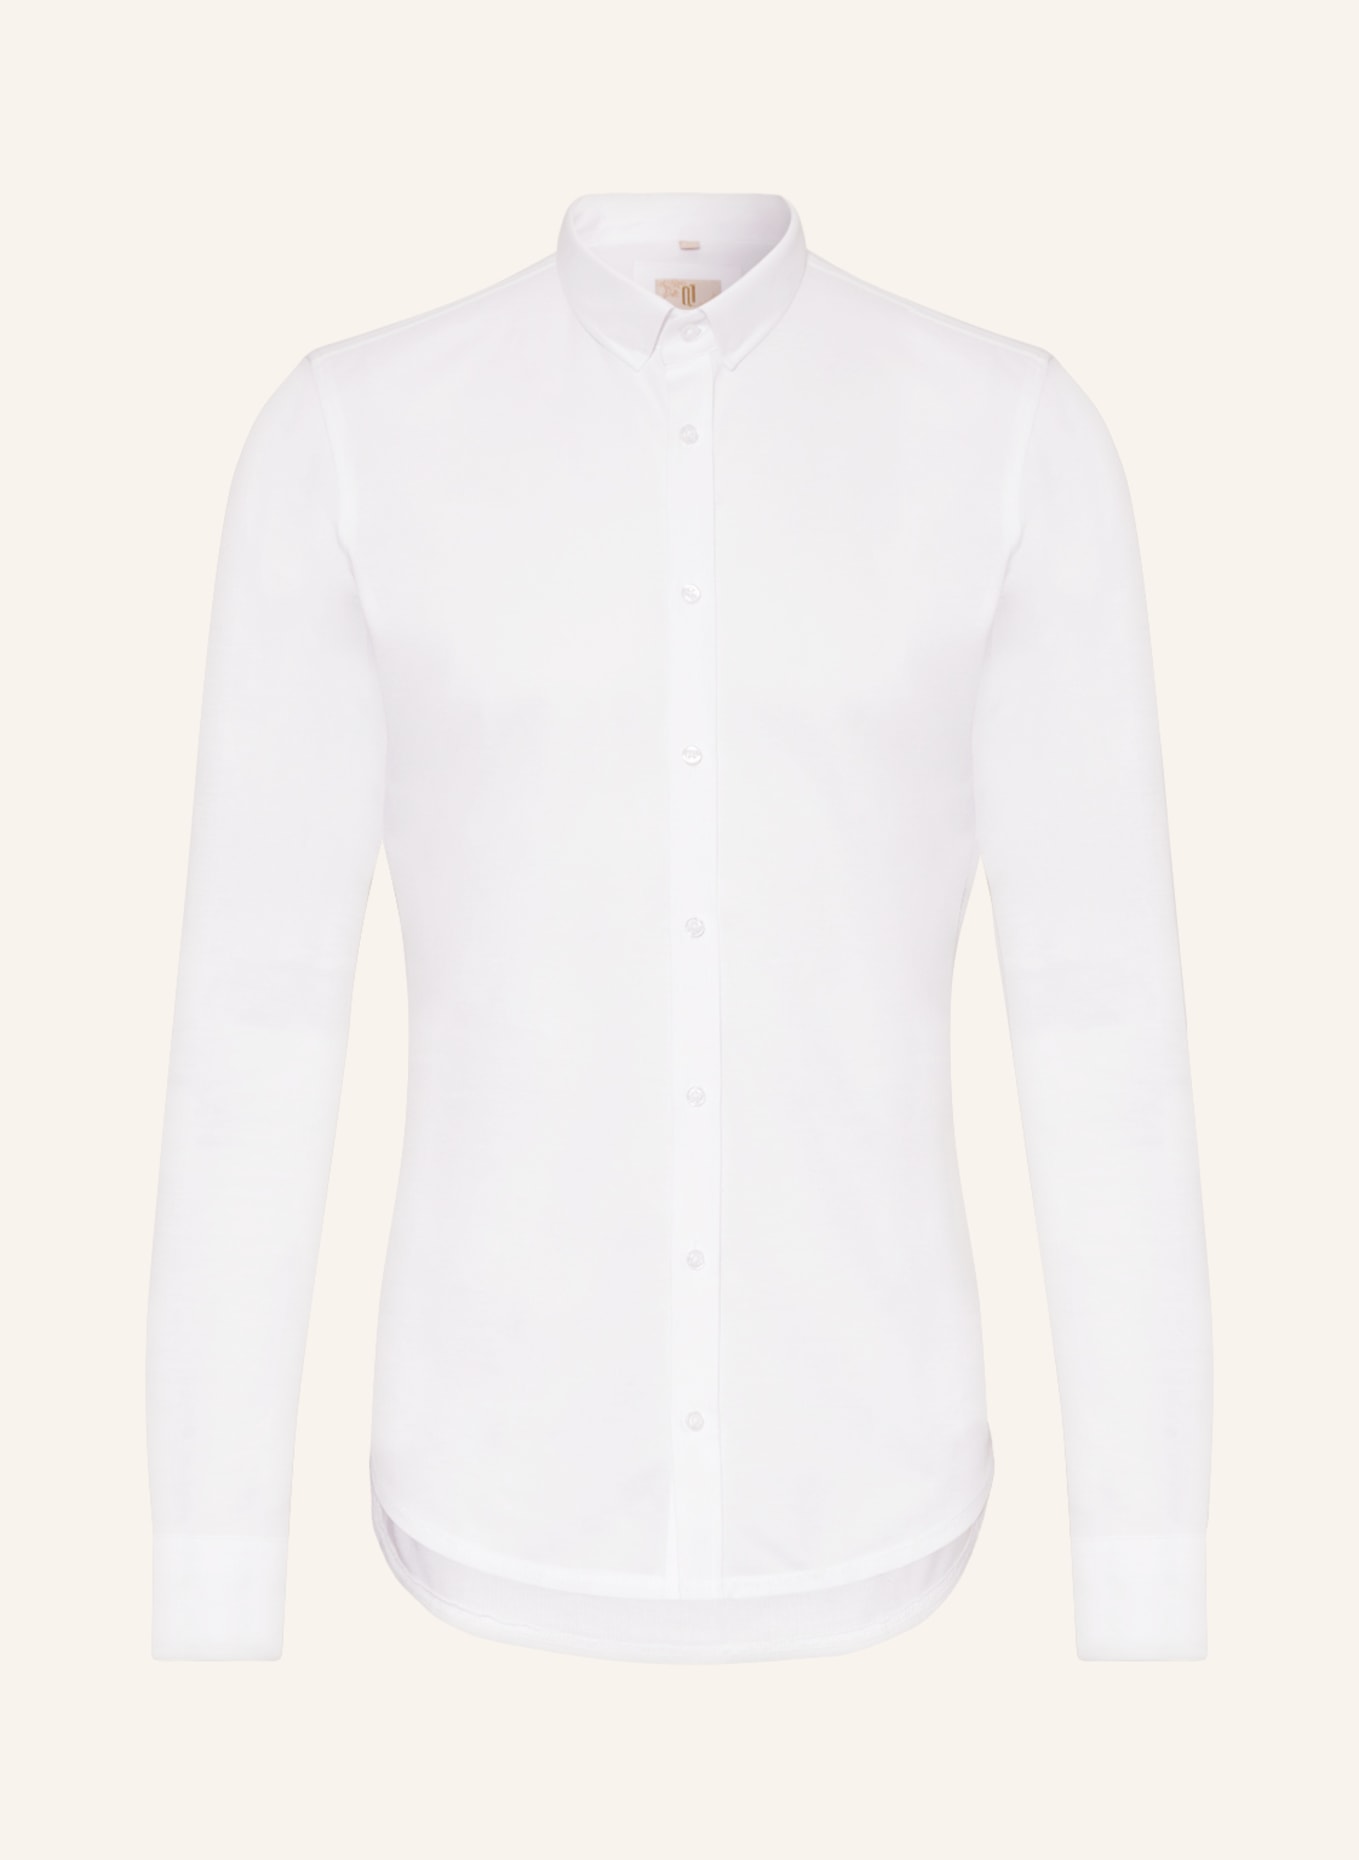 Q1 Manufaktur Piqué-Hemd Extra Slim Fit, Farbe: WEISS (Bild 1)